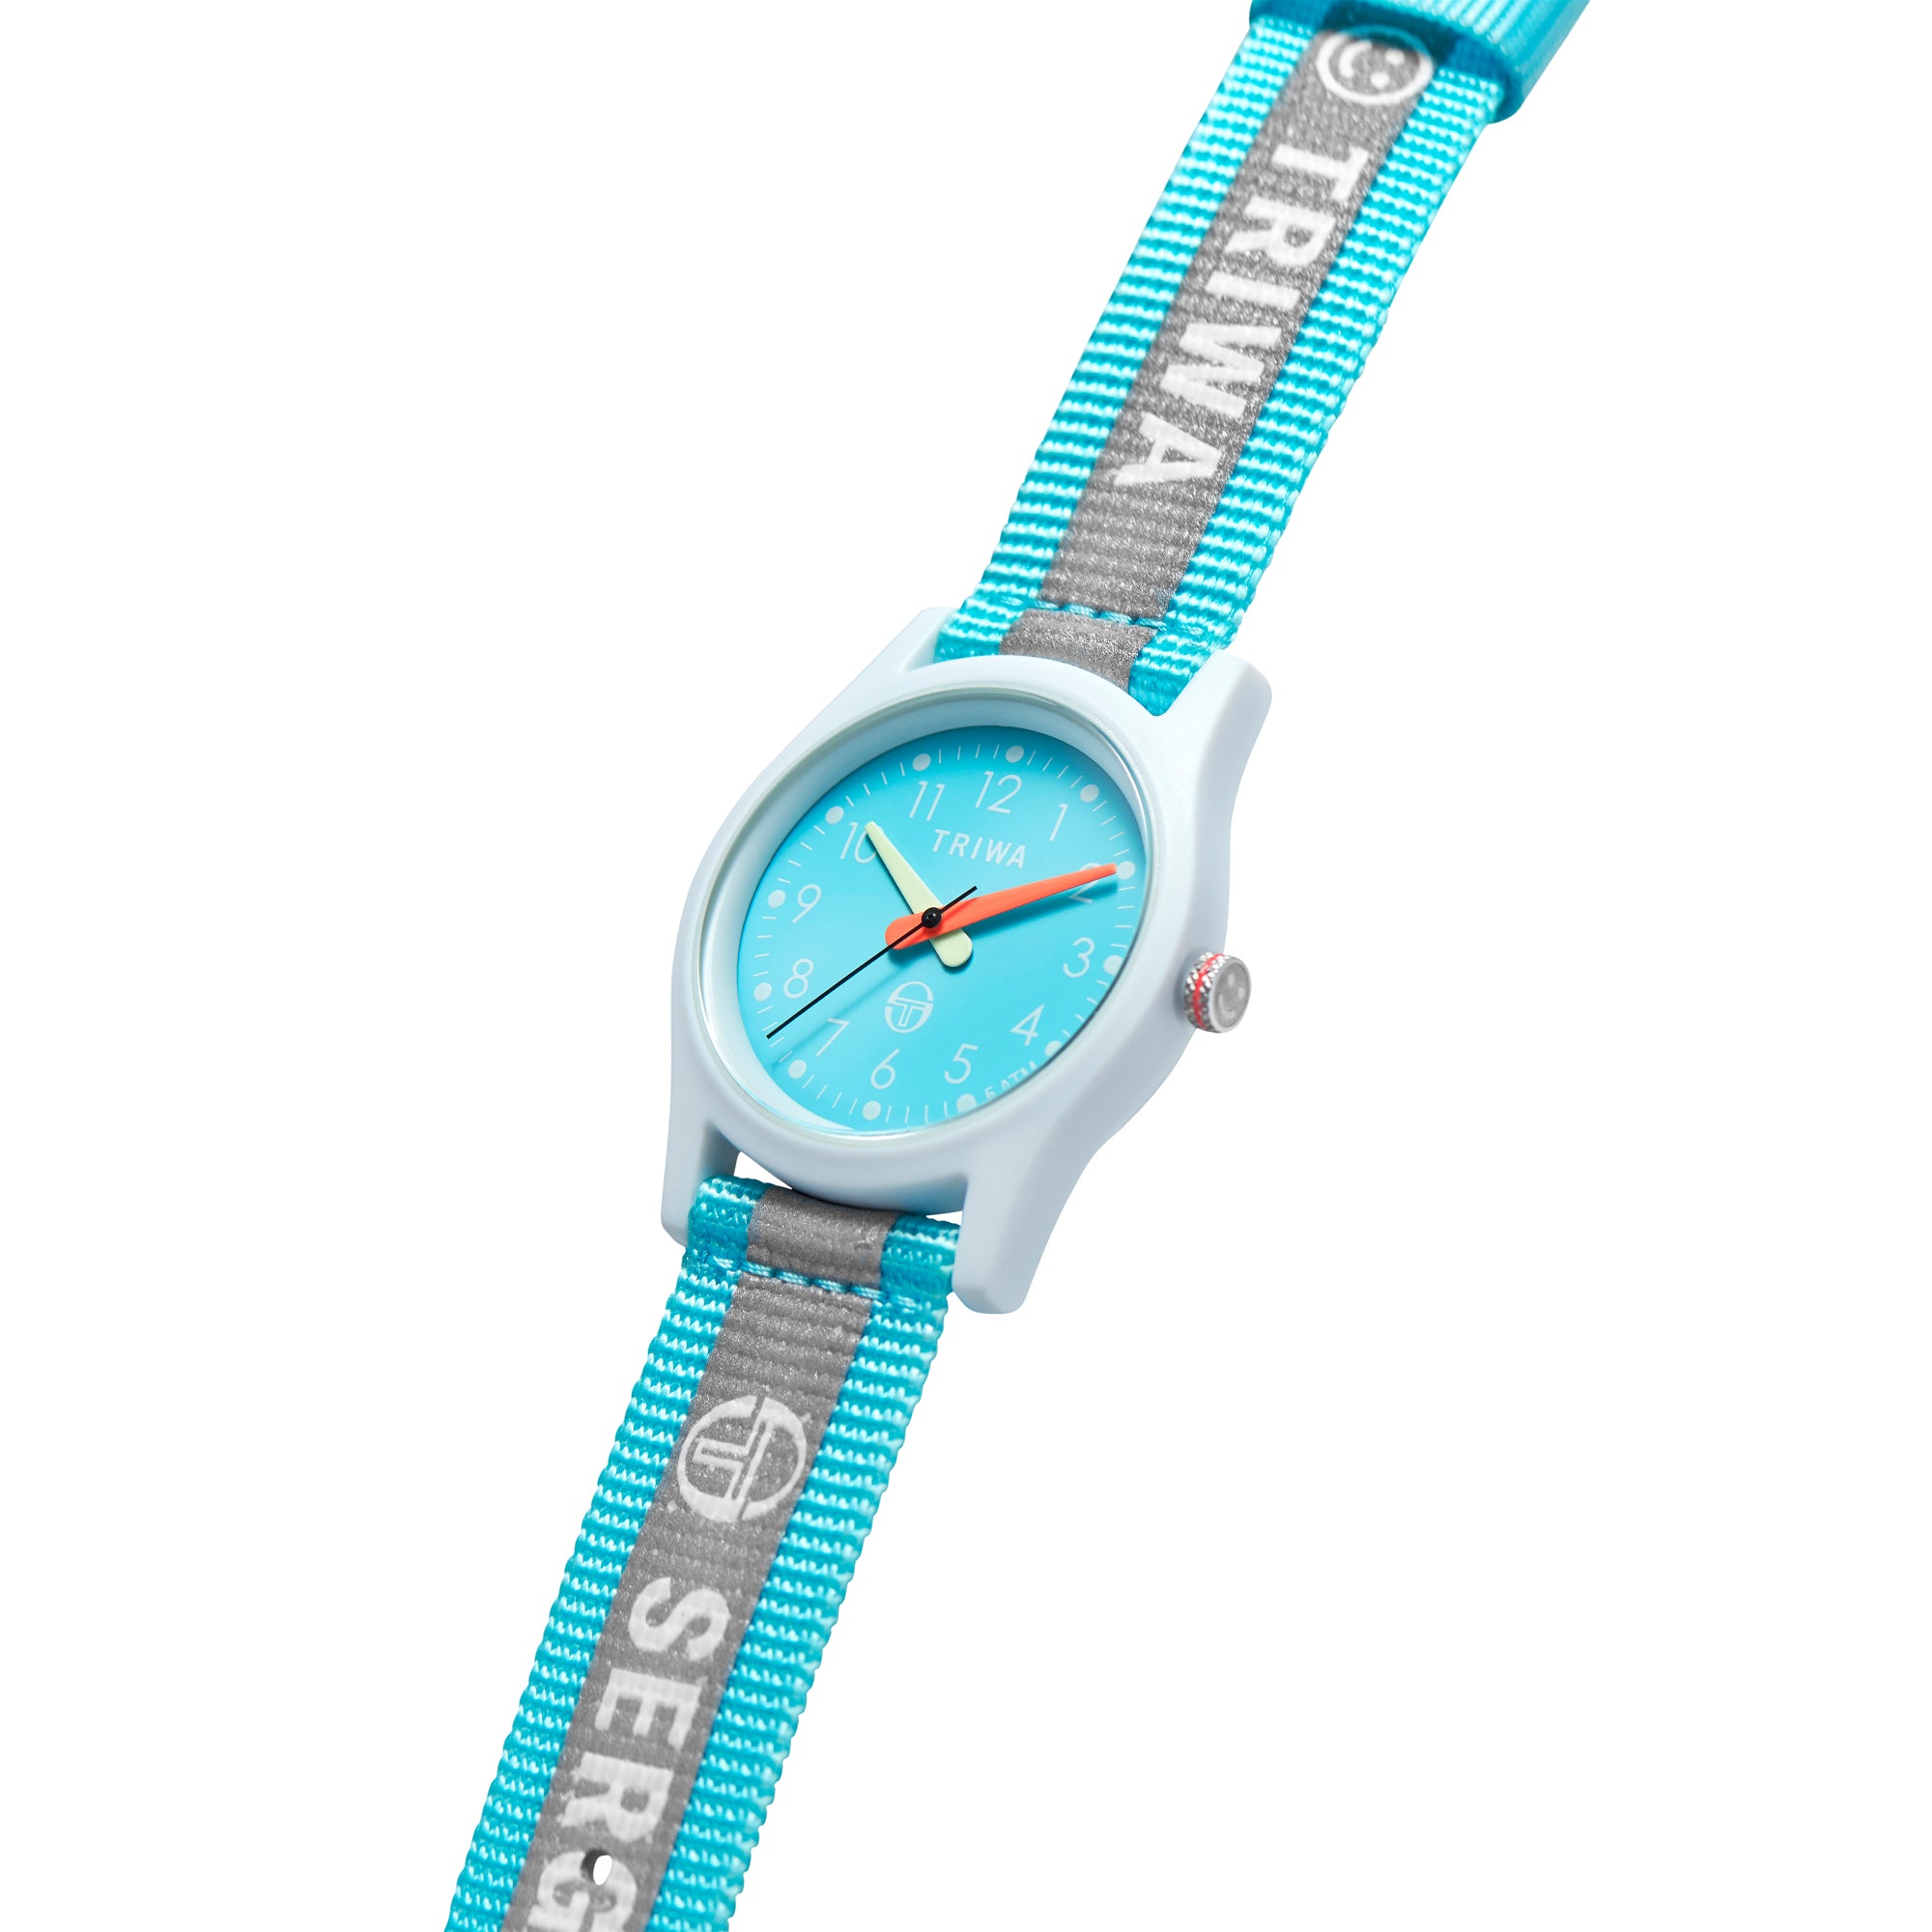 Triwa 'Time for Sports' Sergio Tacchini Aqua Wrist Watch - Limited Edition